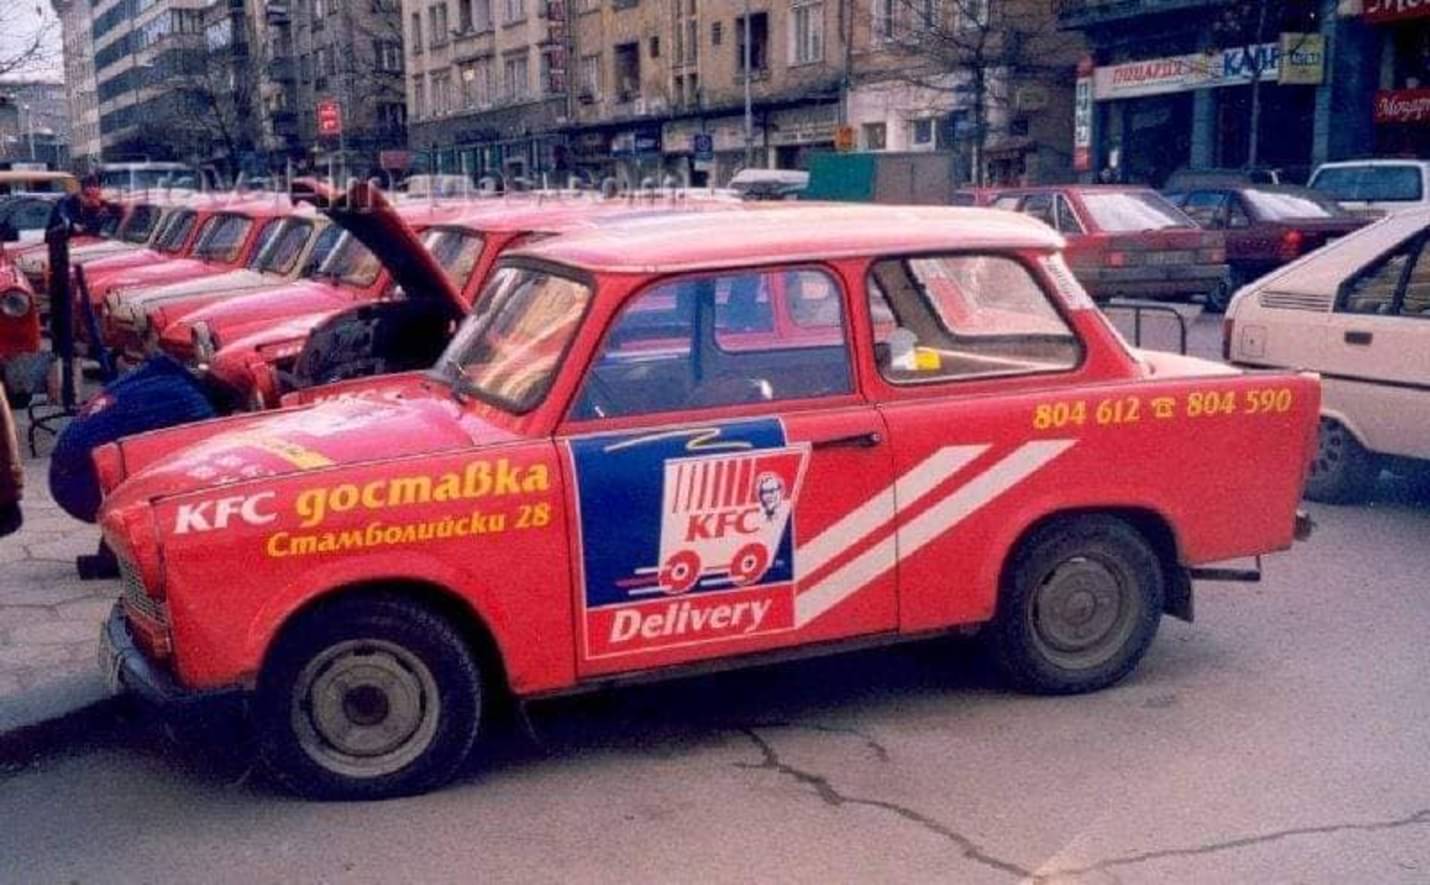 KFC_Trabant_delivery_Sofia_1994.jpg